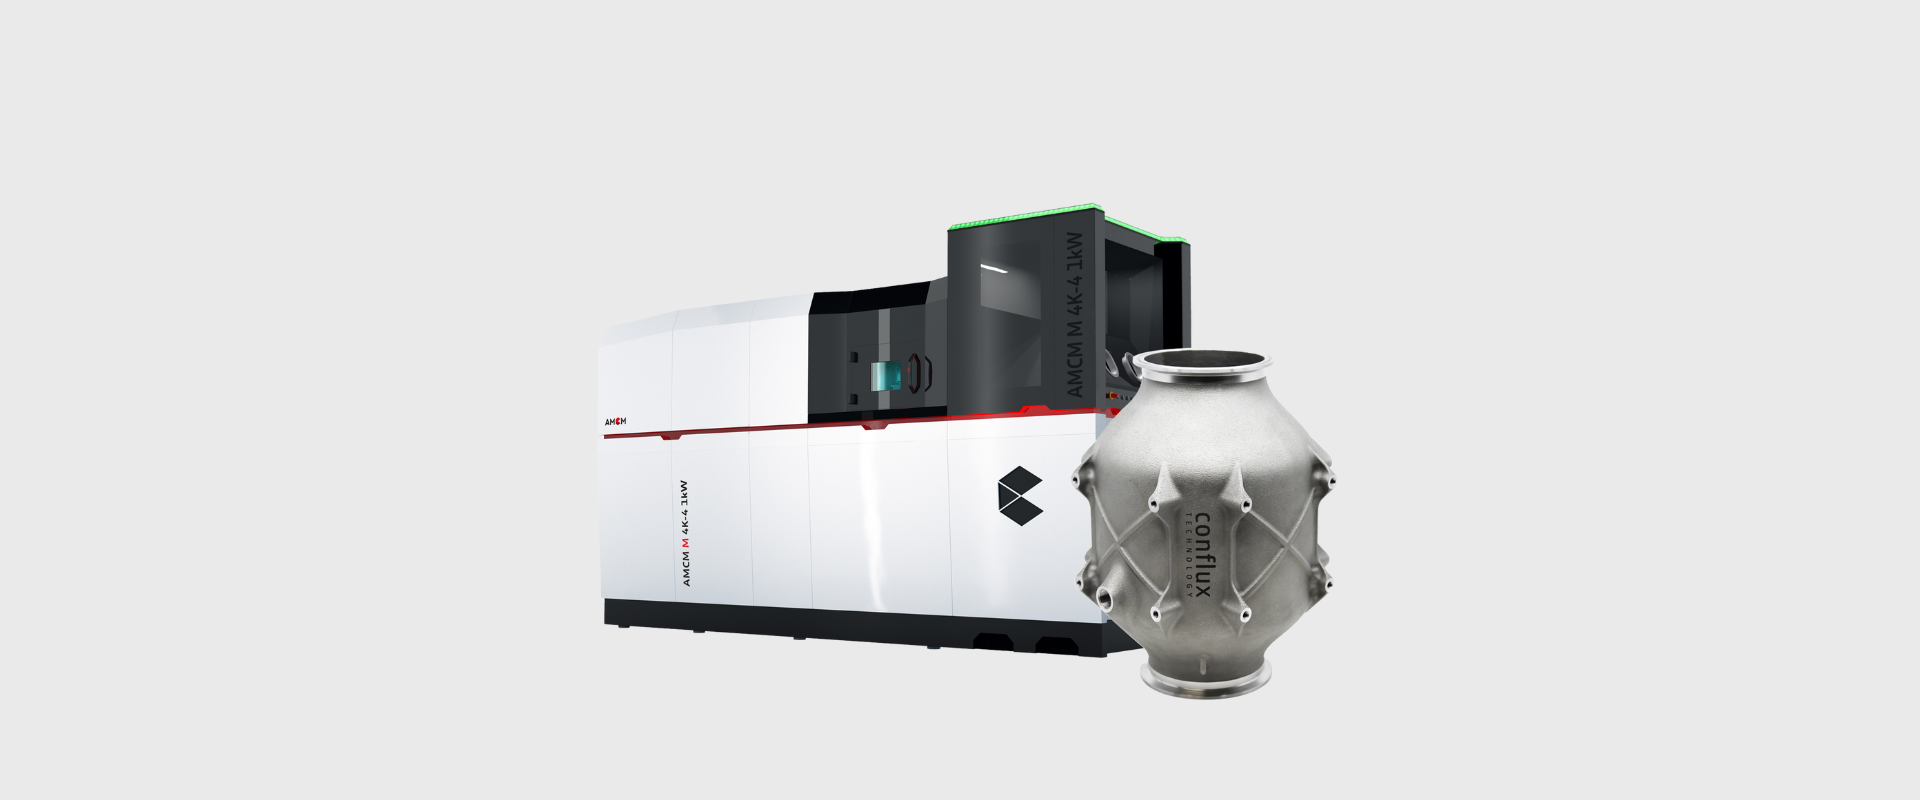 AMCM M4K 3d printing machine with Conflux Technology Argon Gas Heat Exchanger part in front of machine.